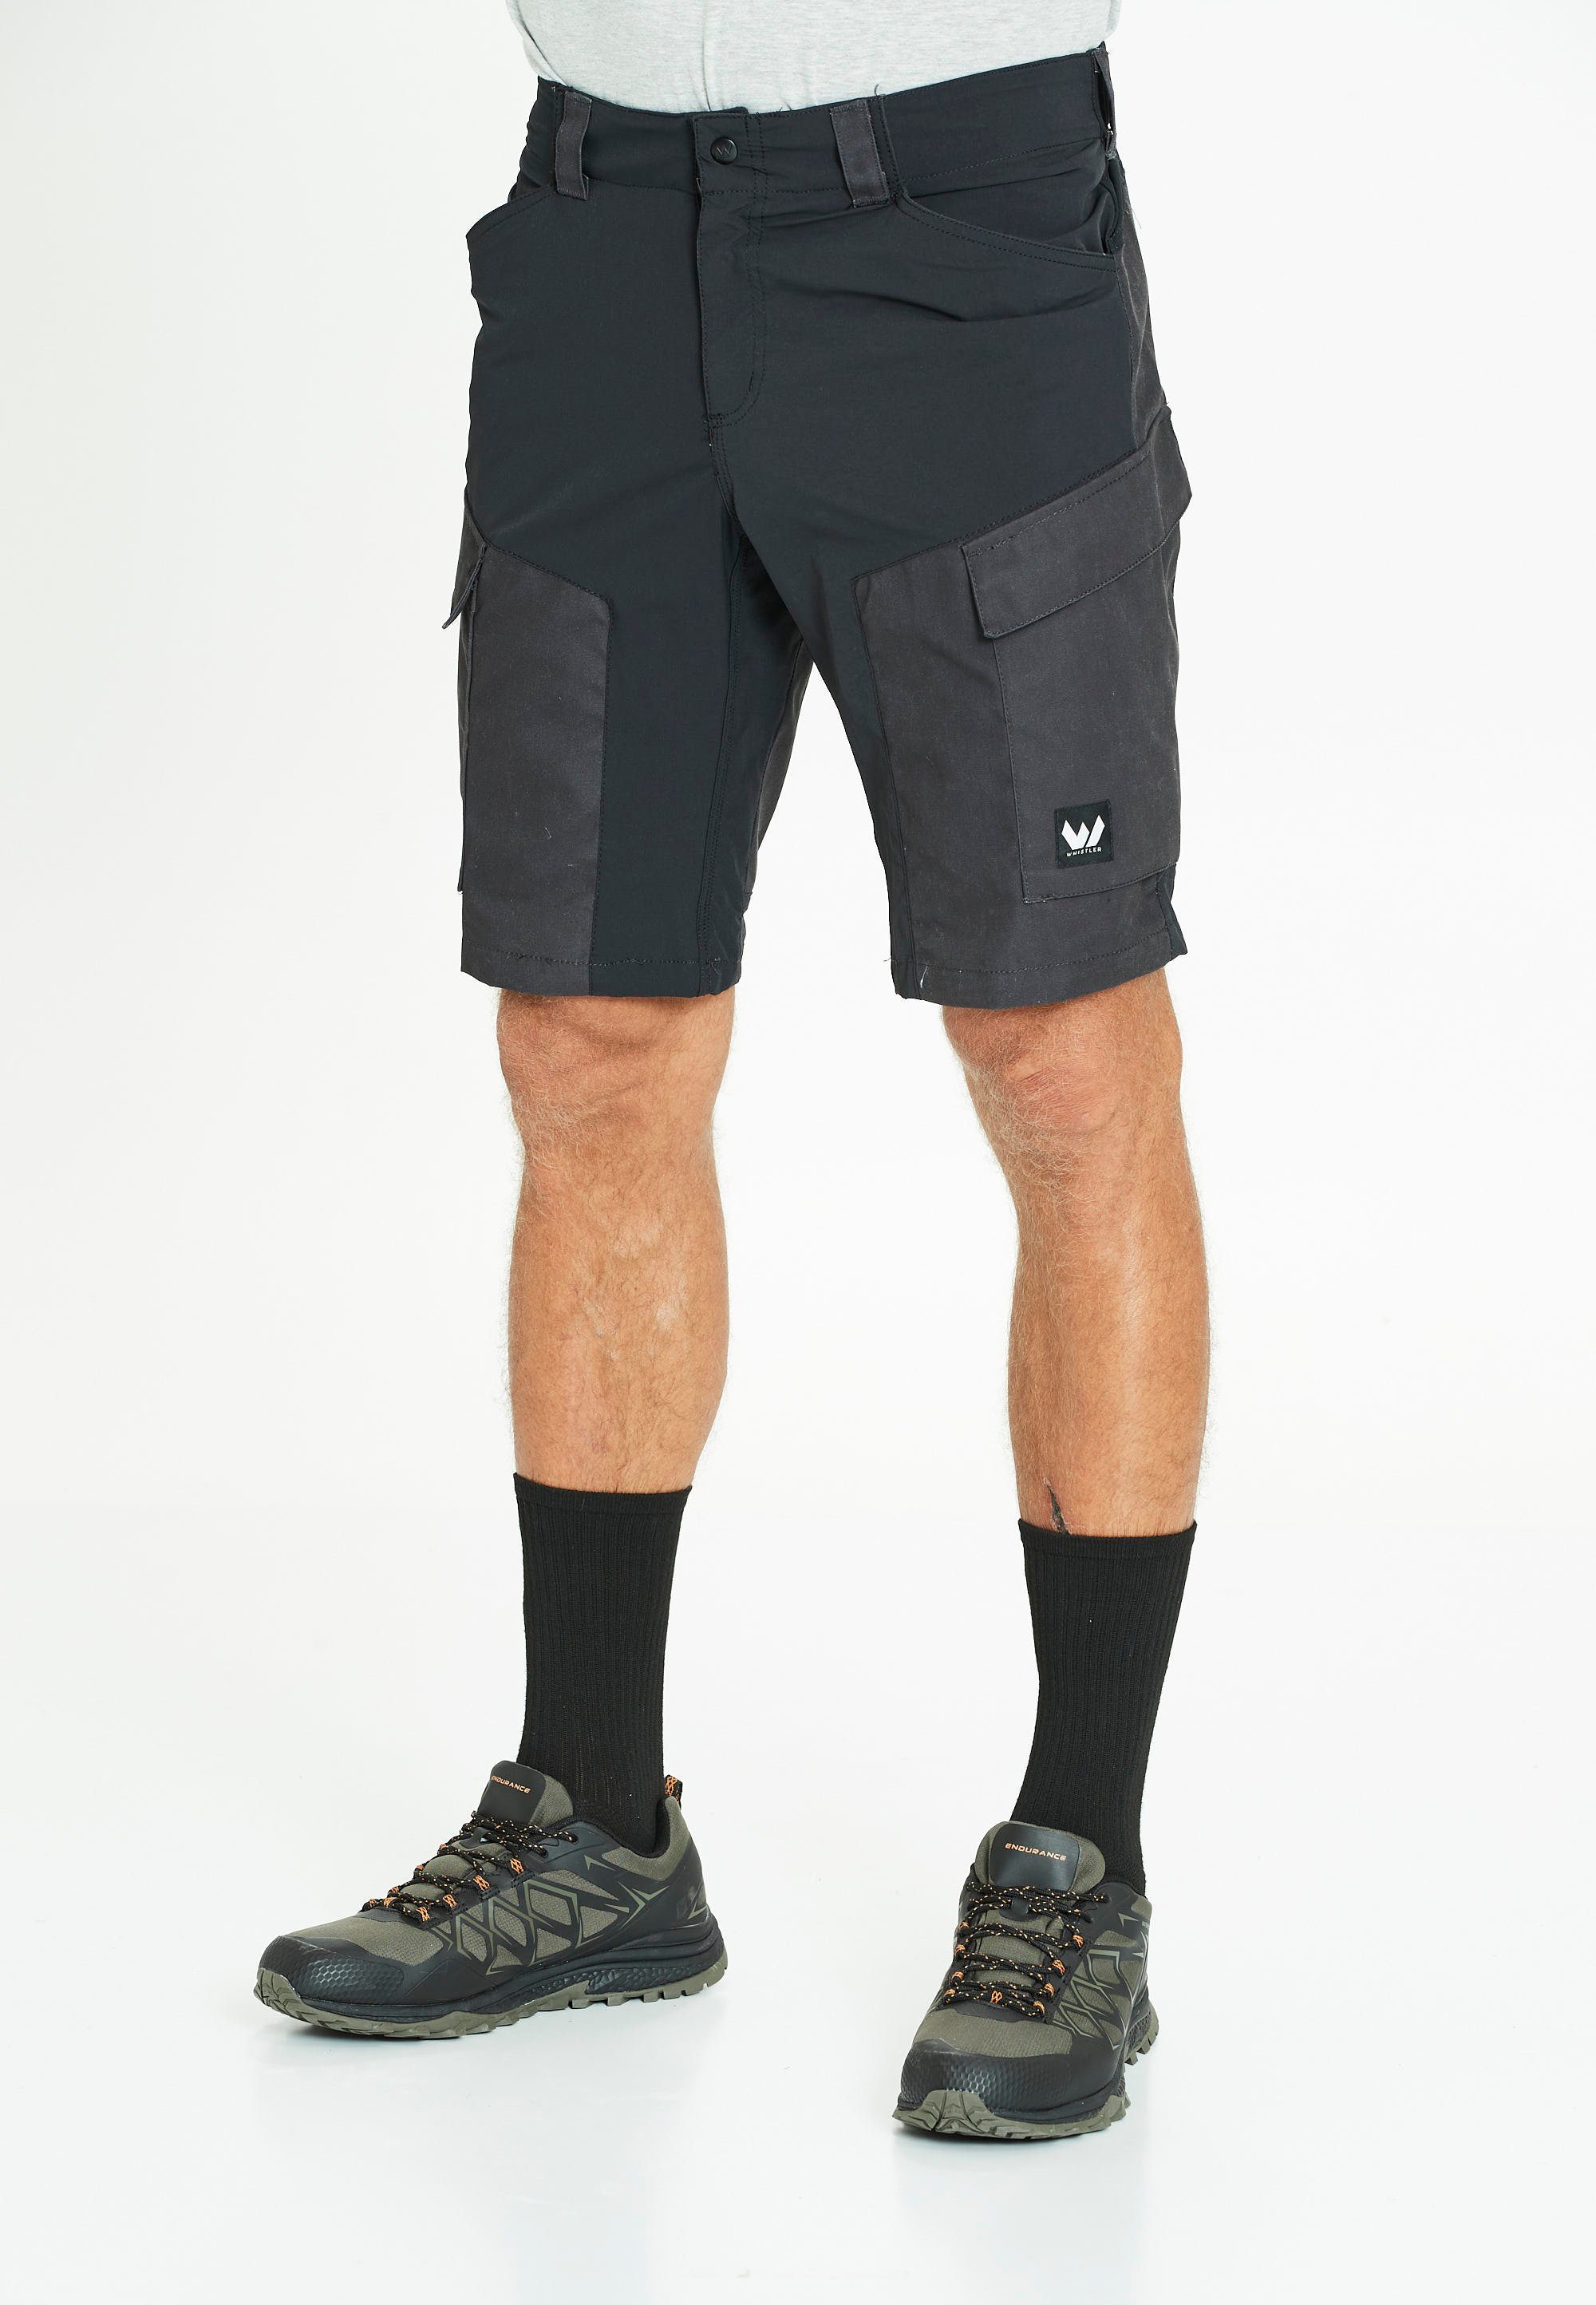 WHISTLER Shorts ROMMY mit atmungsaktivem Materialmix dunkelgrau-schwarz